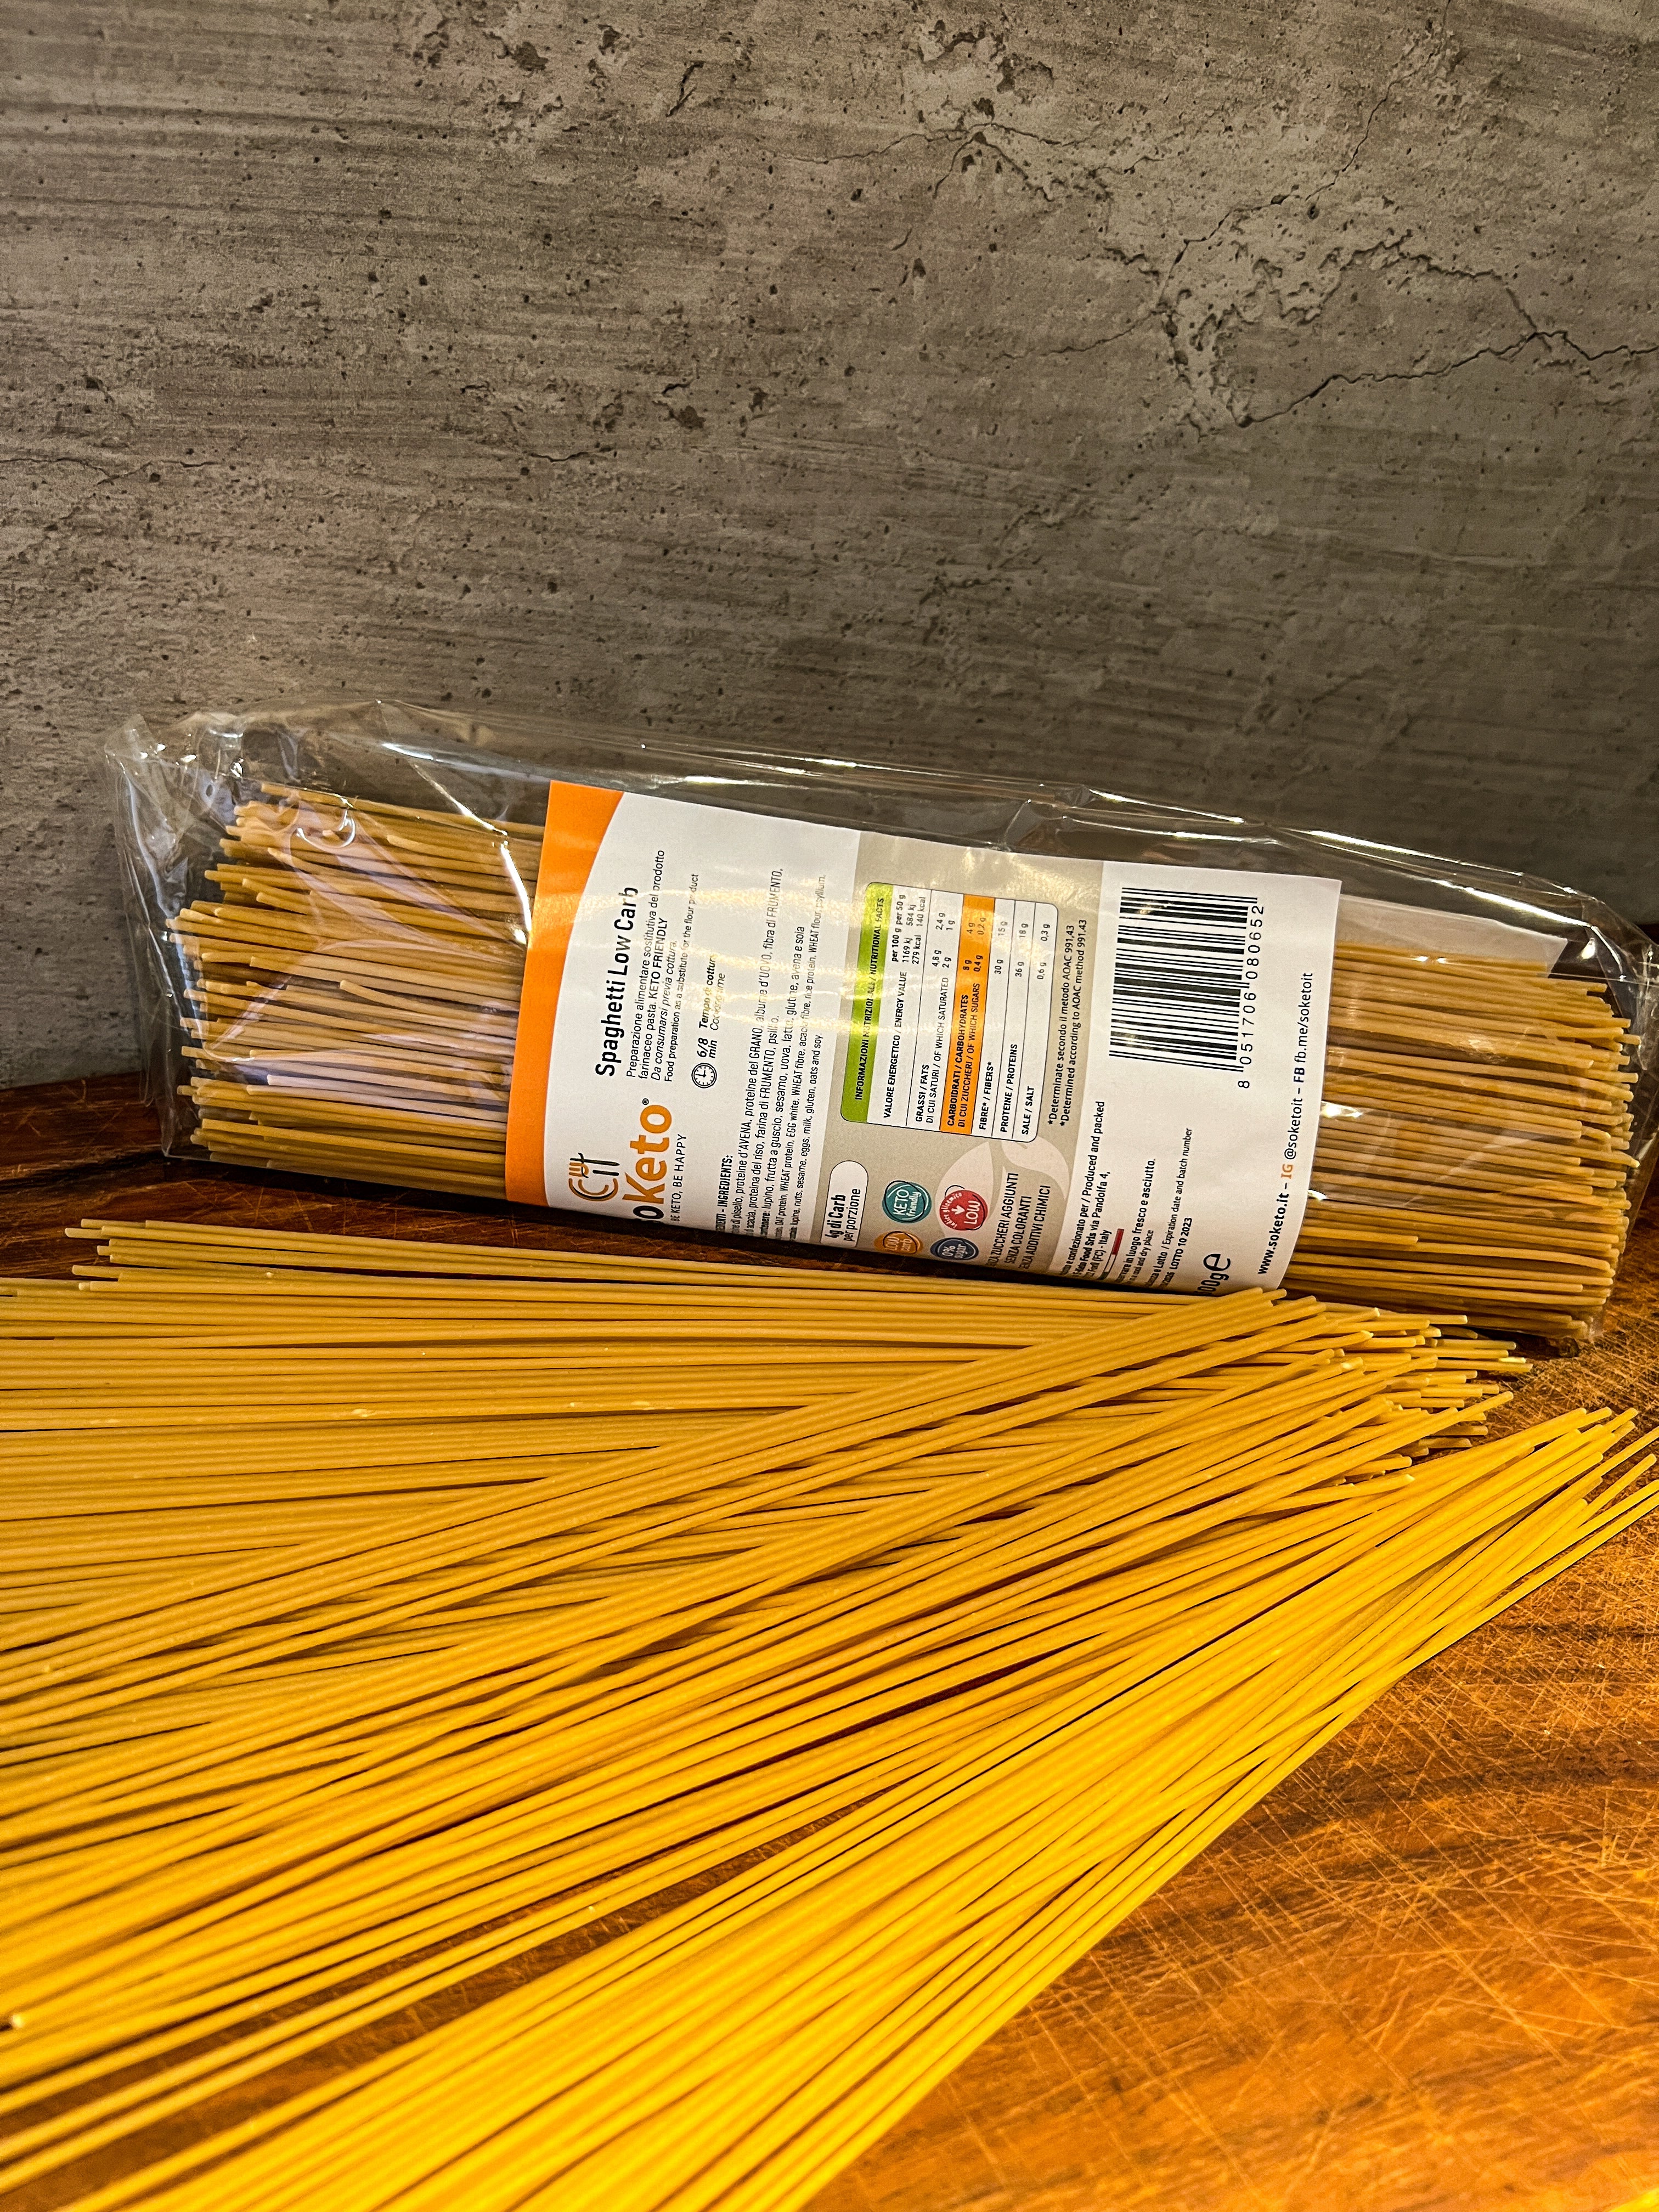 Spaghetti nest Keto (200 g) 2,5gr carbo